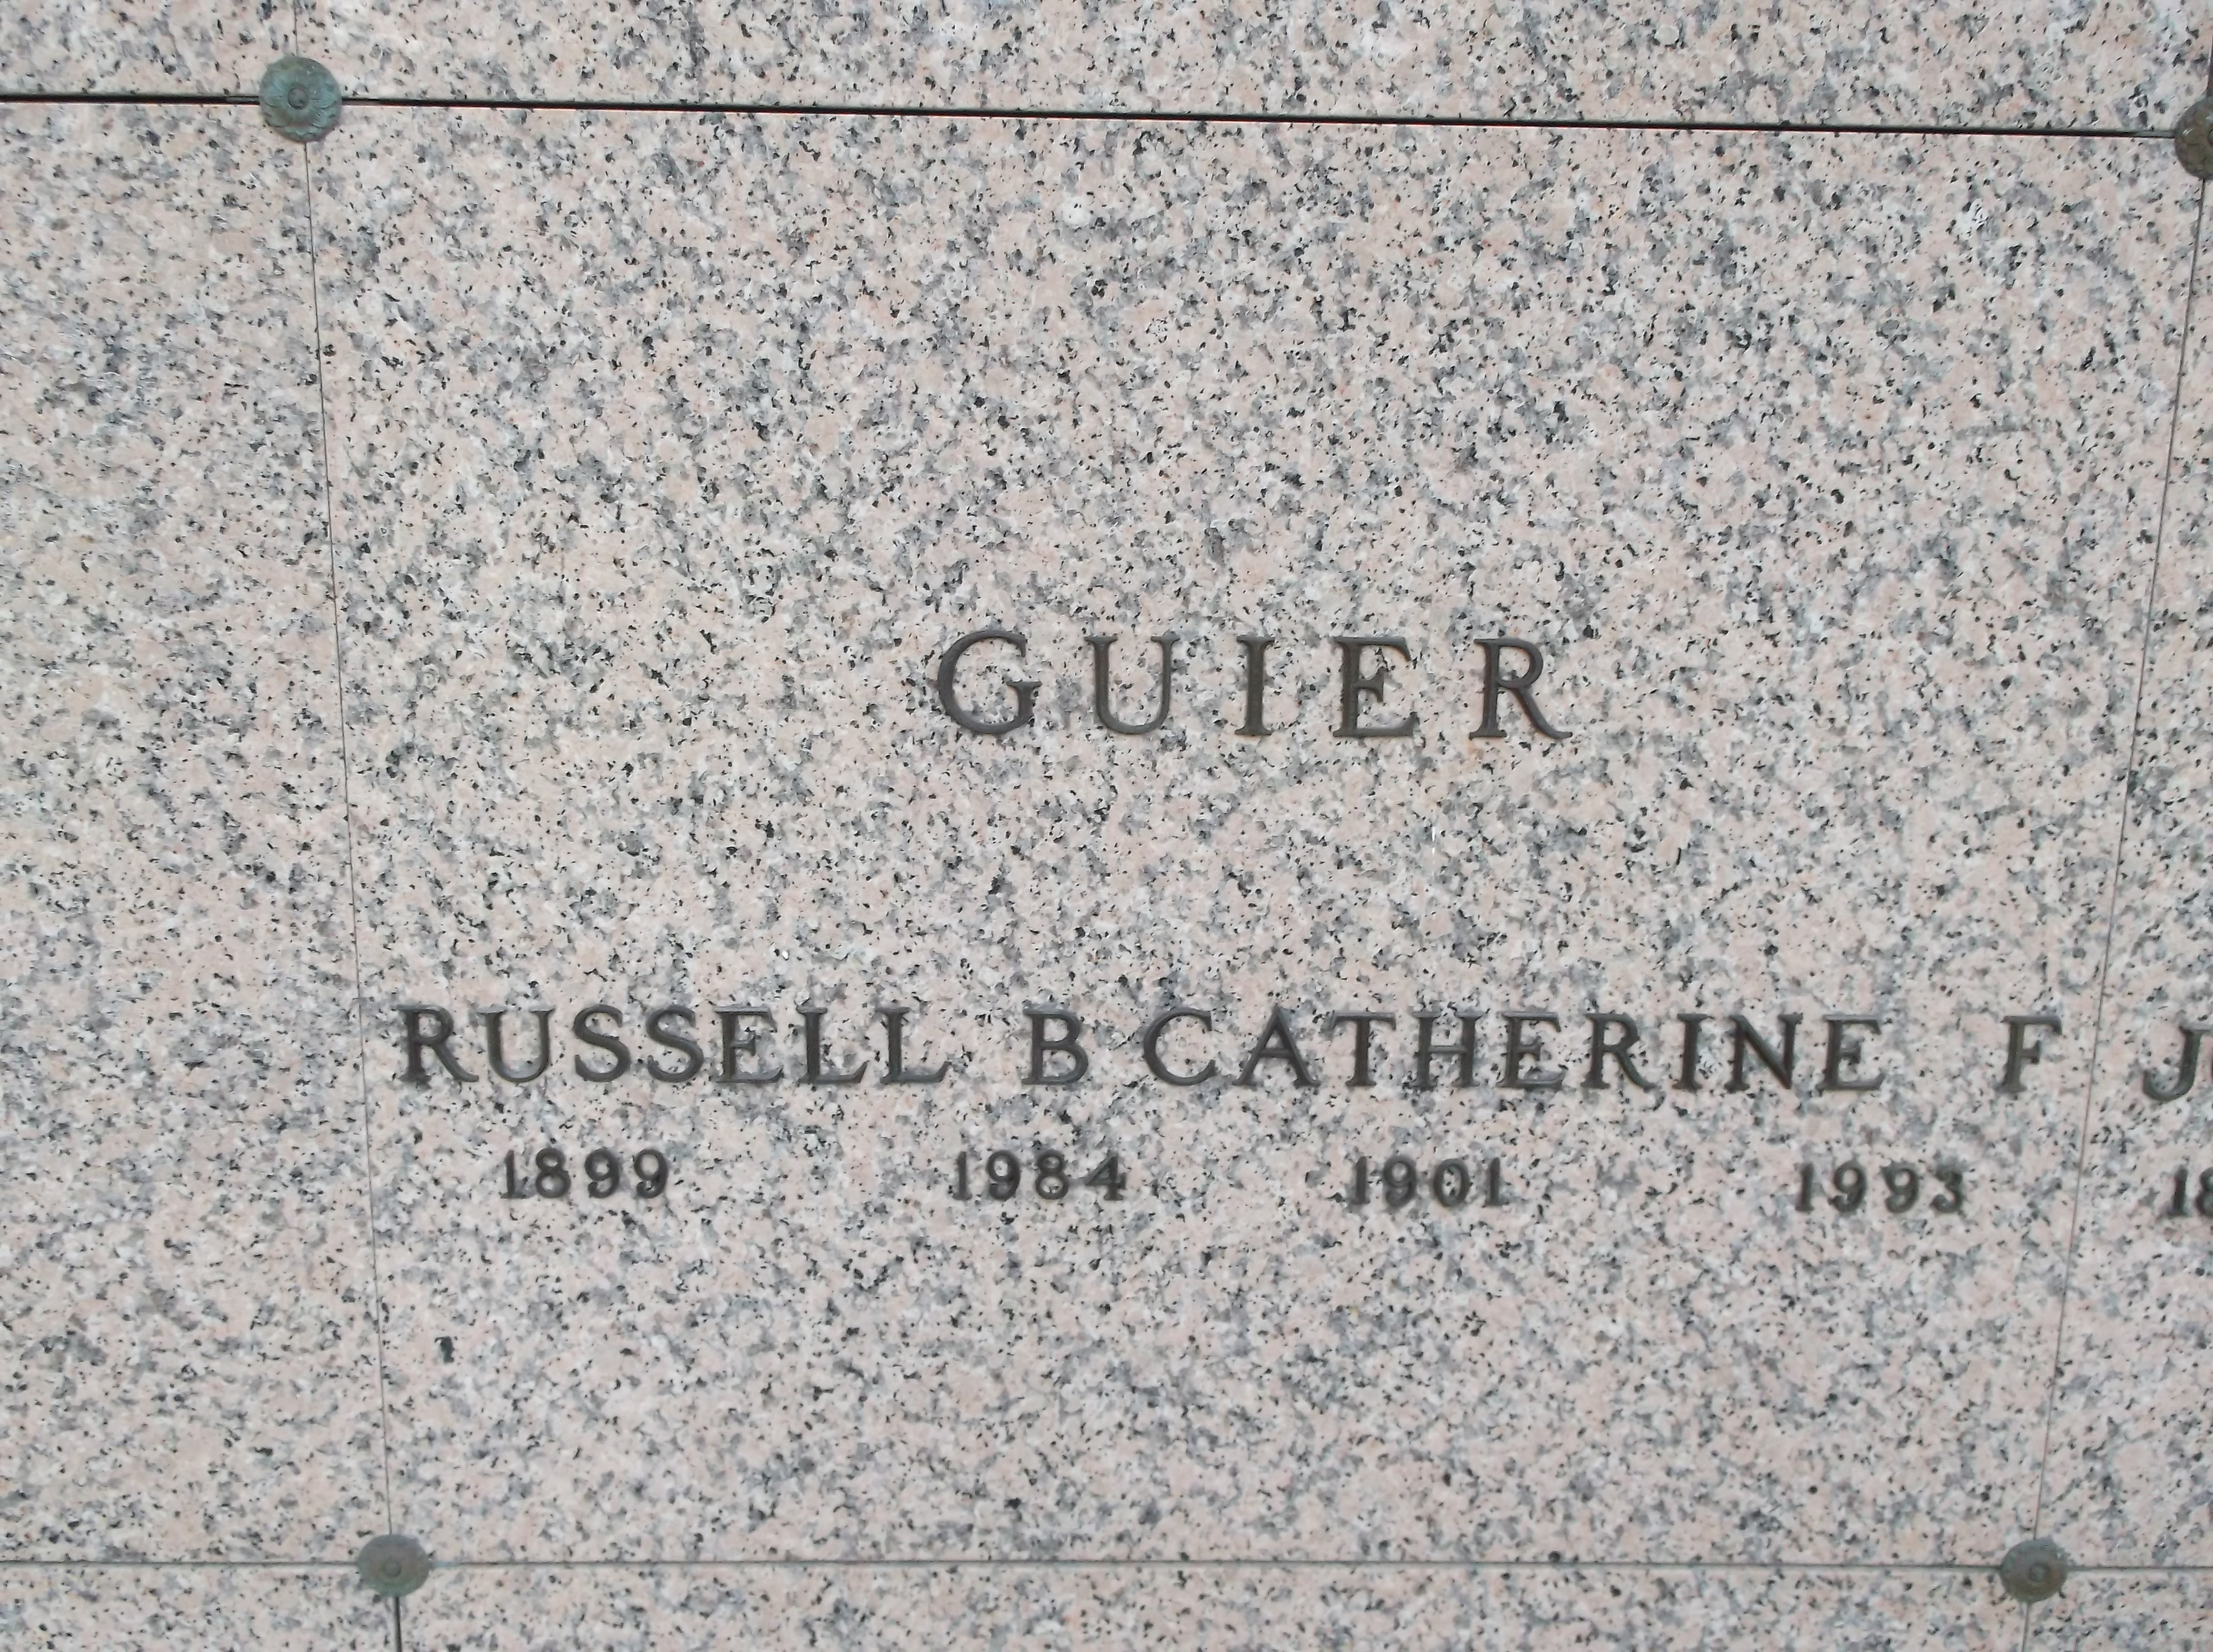 Catherine F Guier